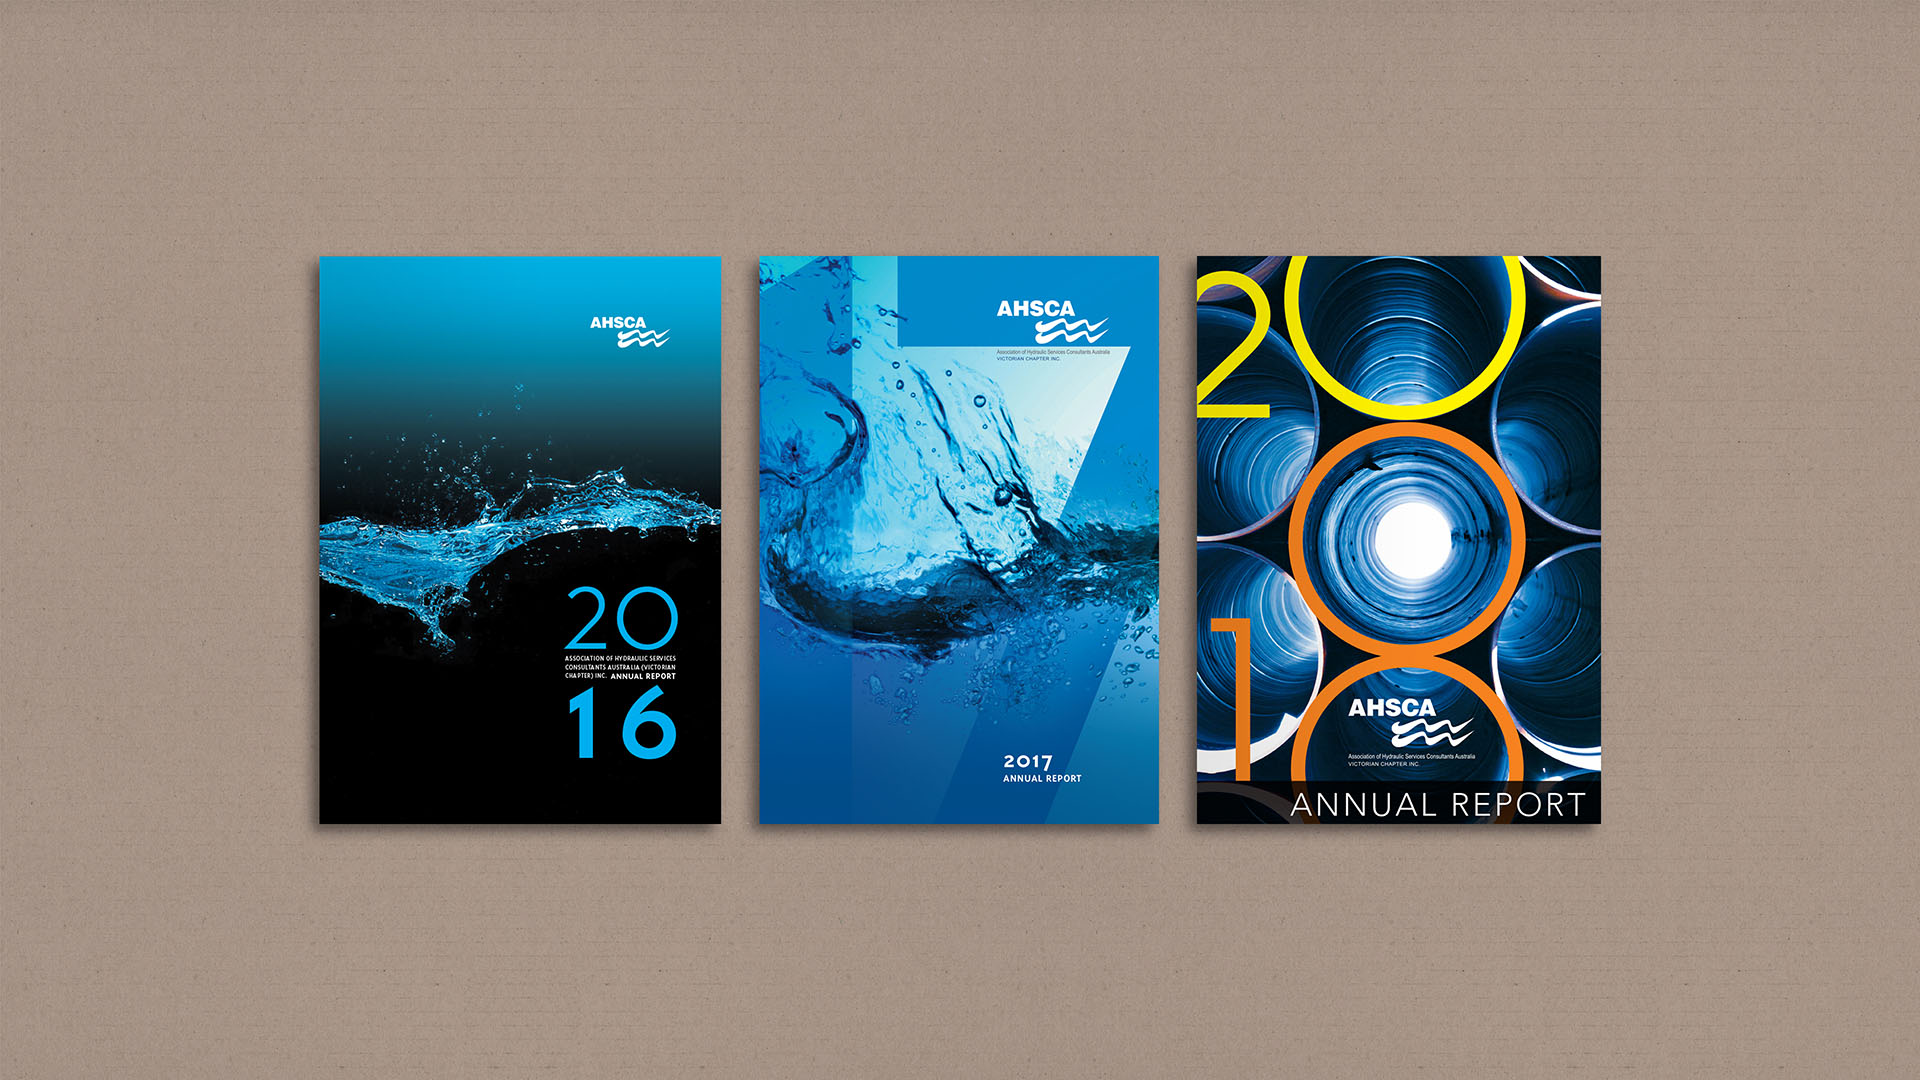 AHSCA Annual Report Designs - Saunders Design Group